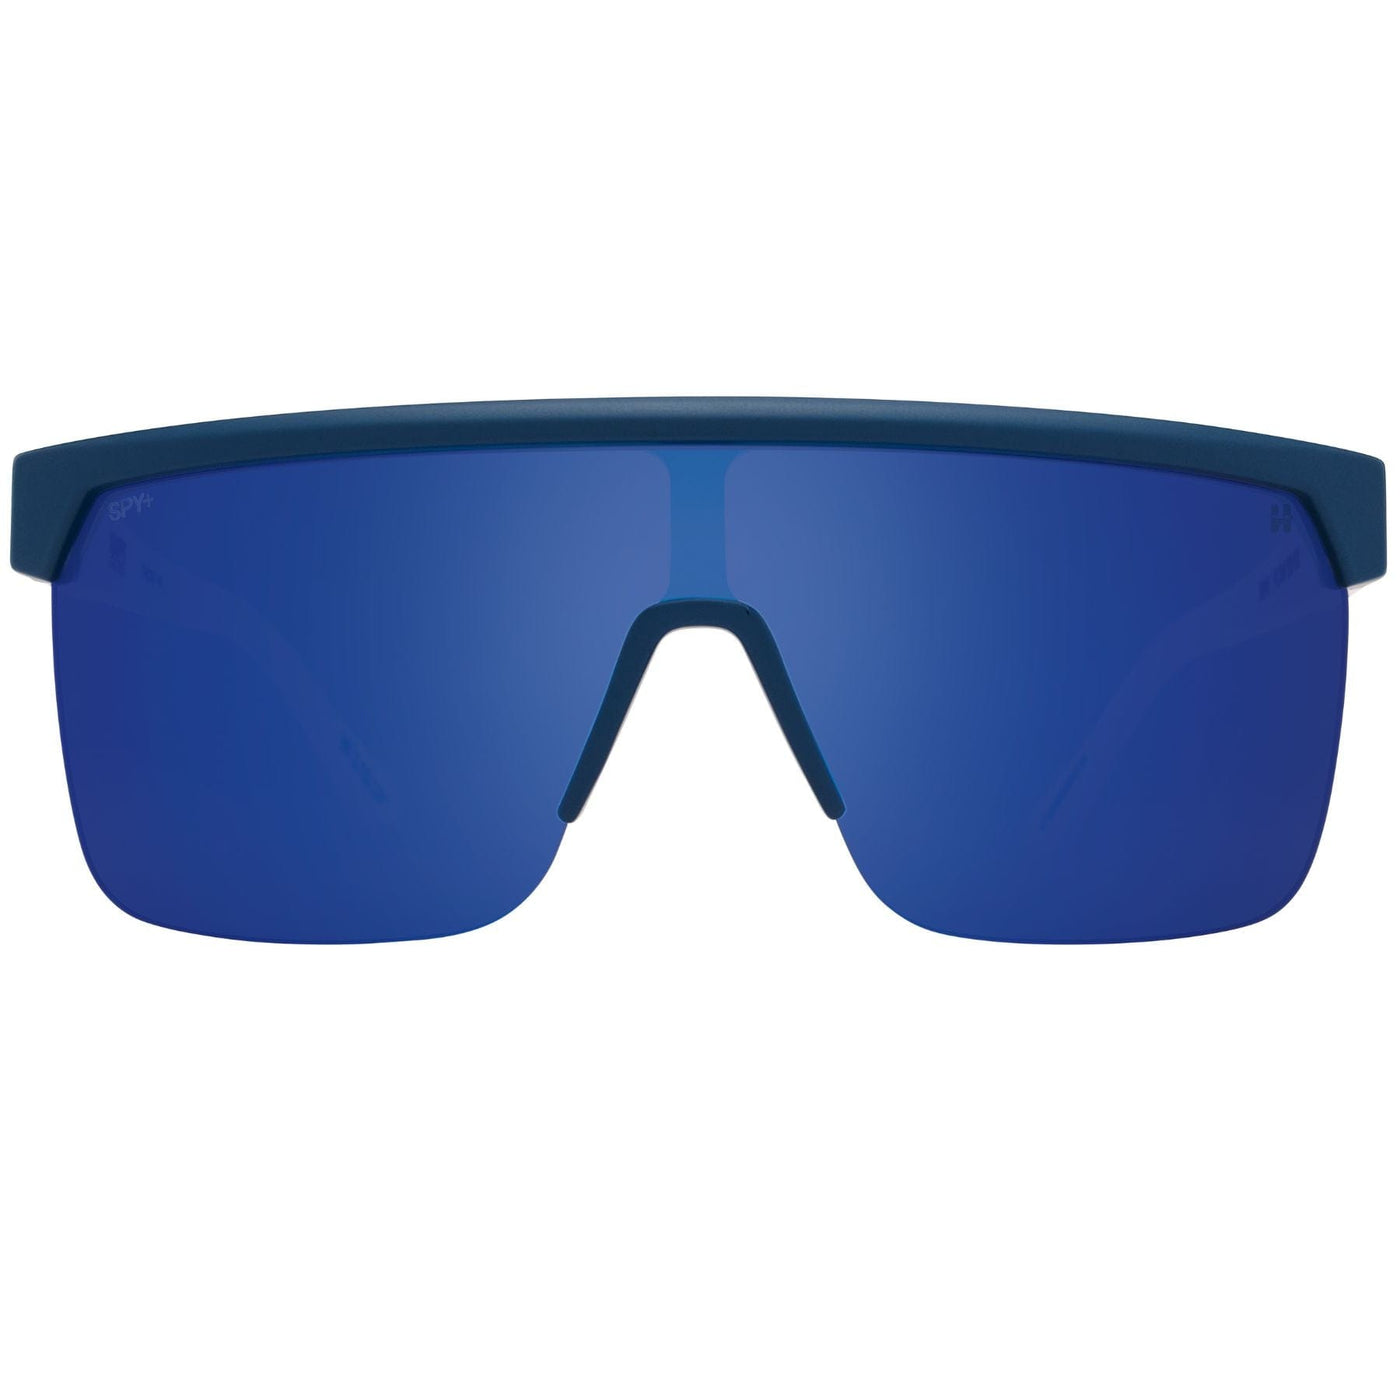 SPY FLYNN 5050 Sunglasses, Happy Lens - Blue 8Lines Shop - Fast Shipping